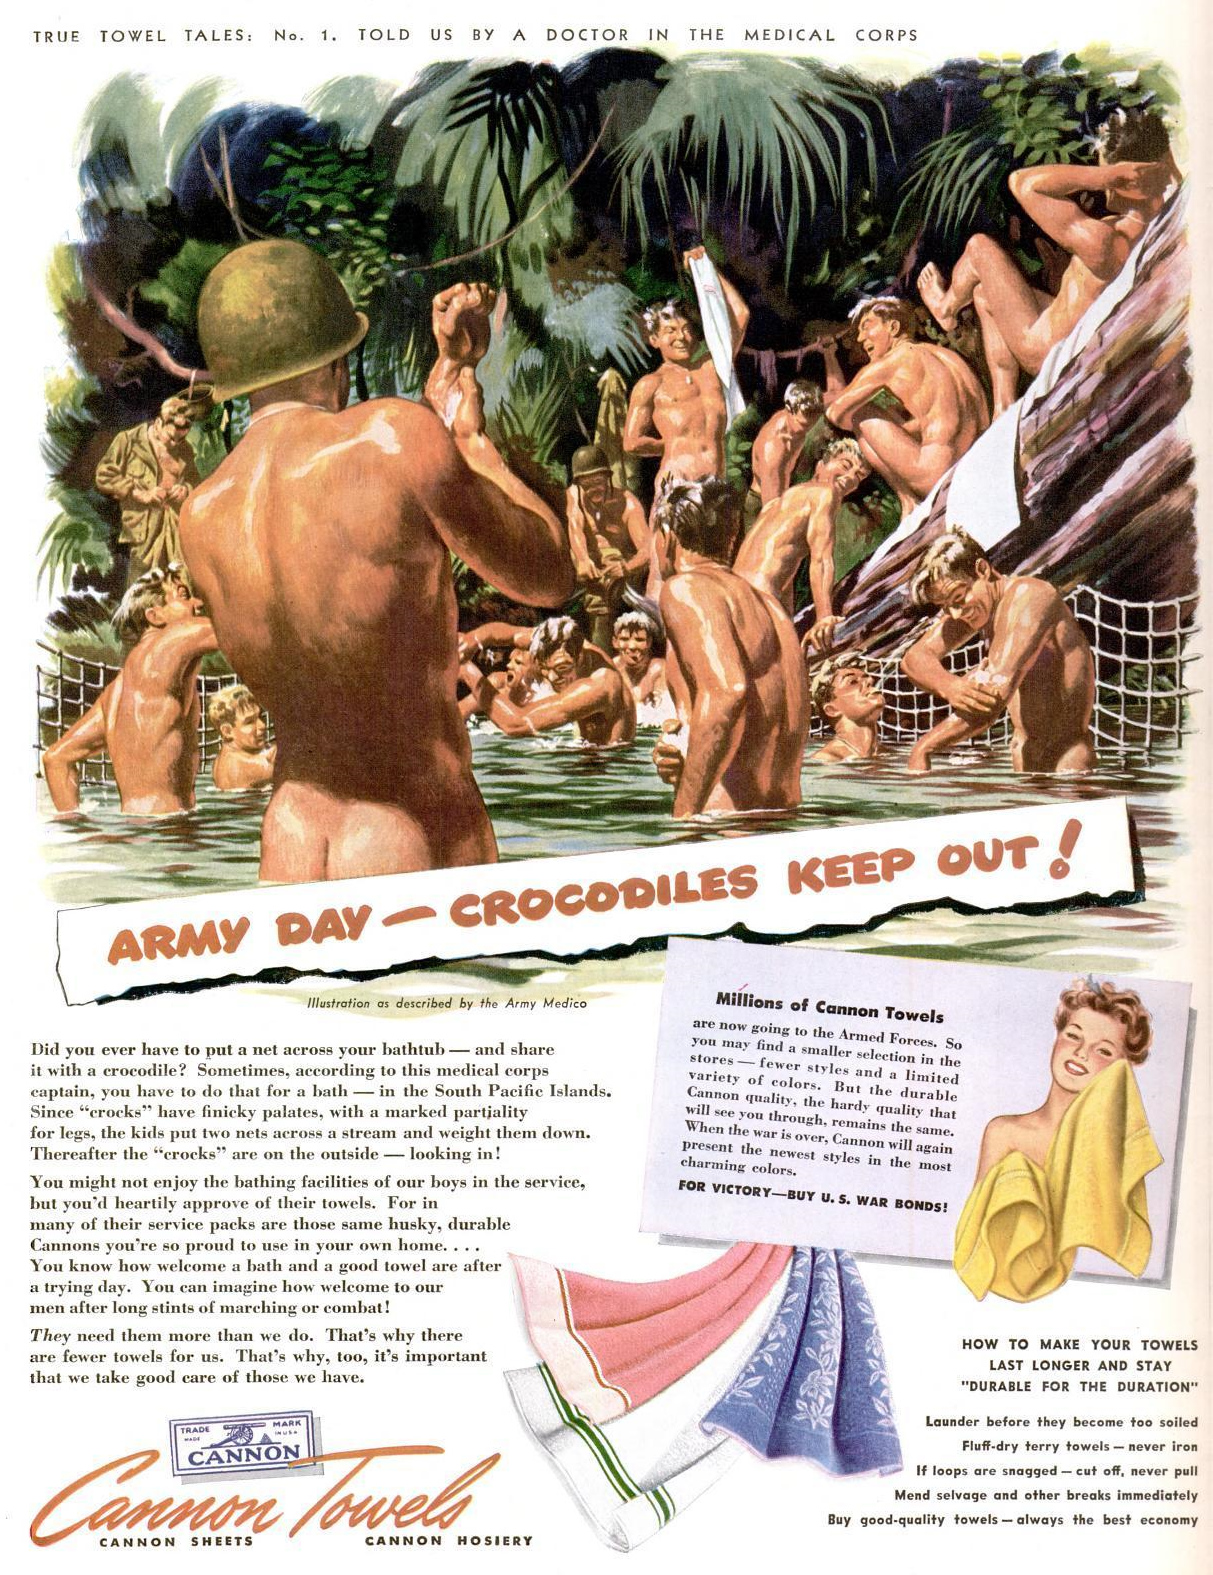 cannon towel ad 1, August 16, 1943, Life Magazine.jpg